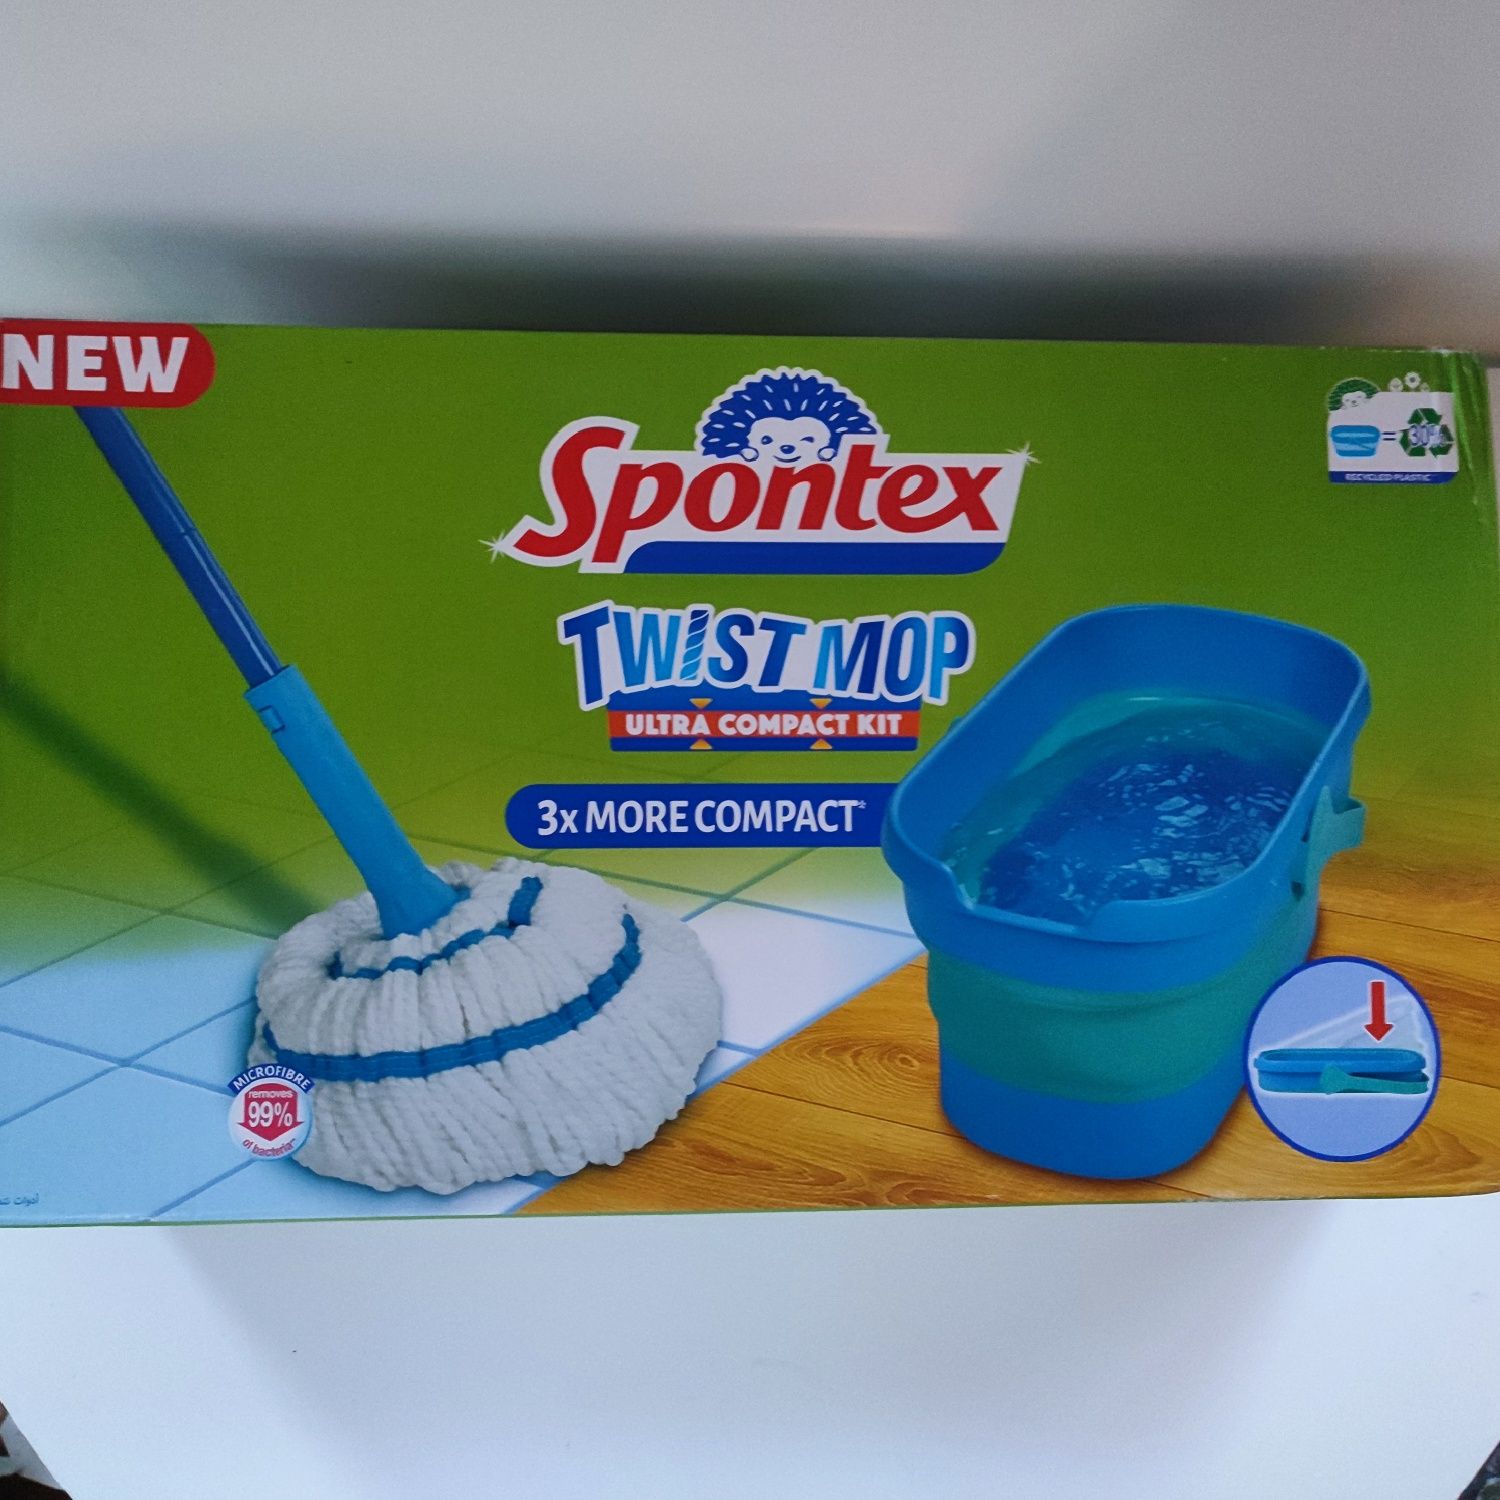 Spontex Twist Mop Ultra Compact Kit 